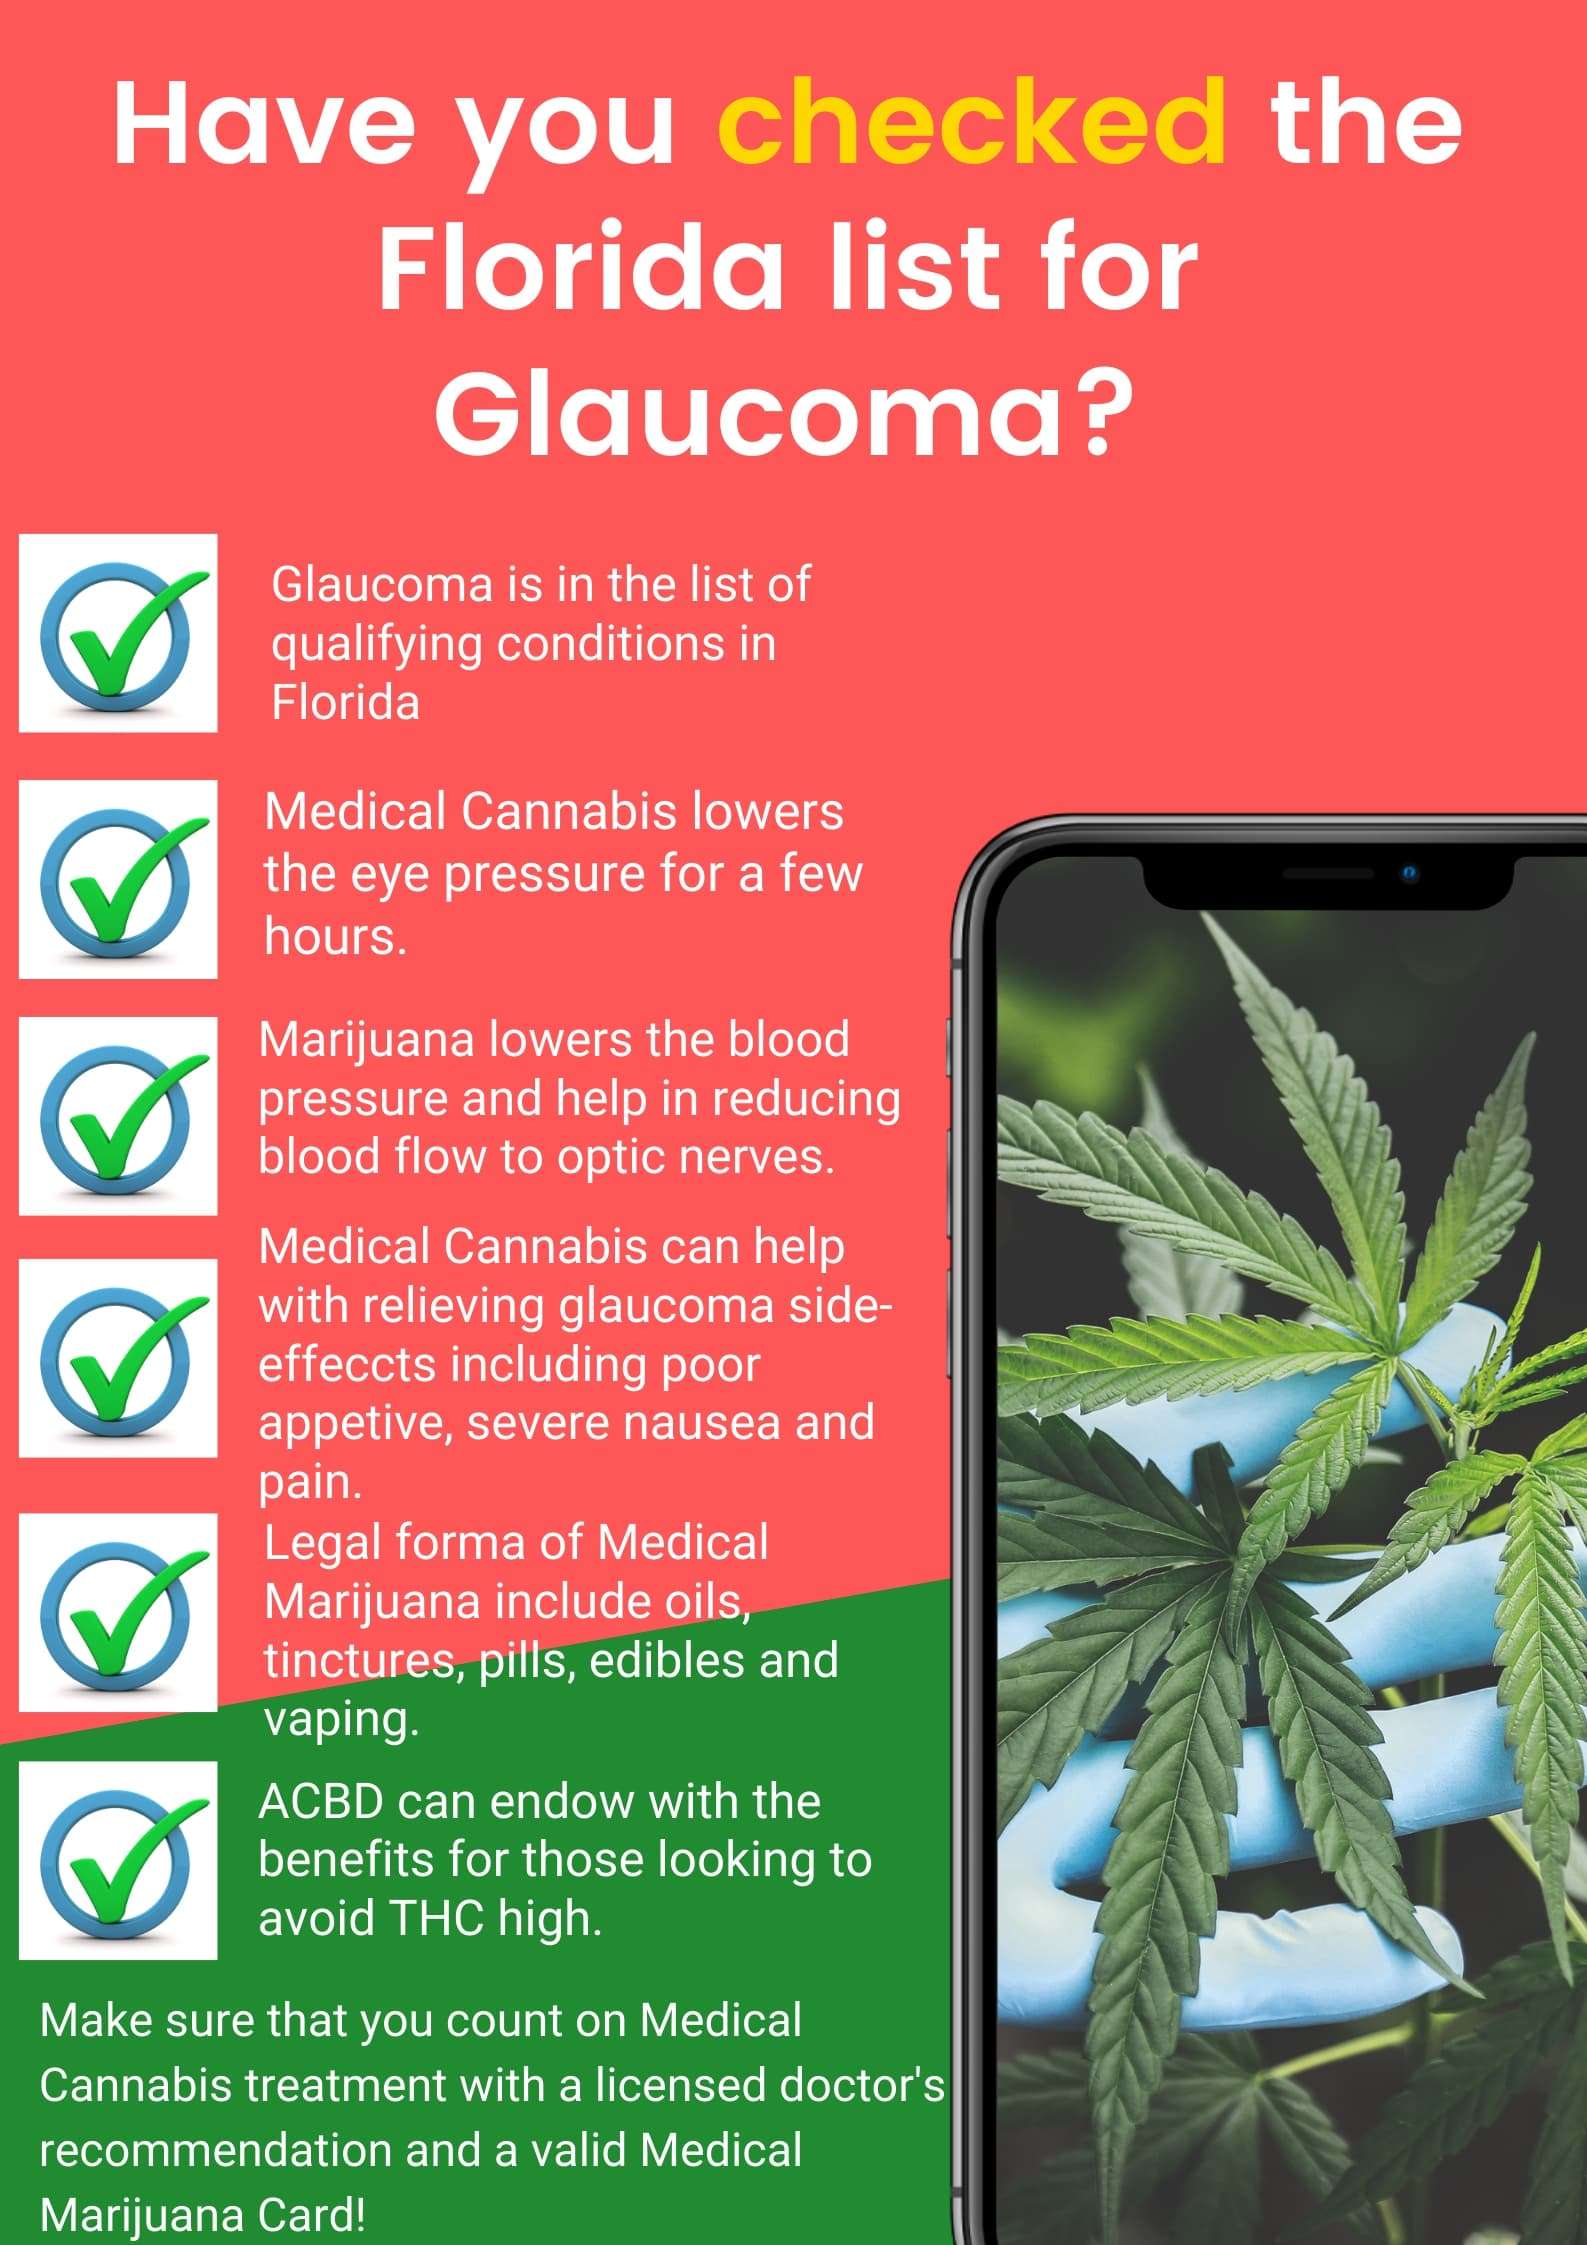 Florida-Glaucoma-checklist